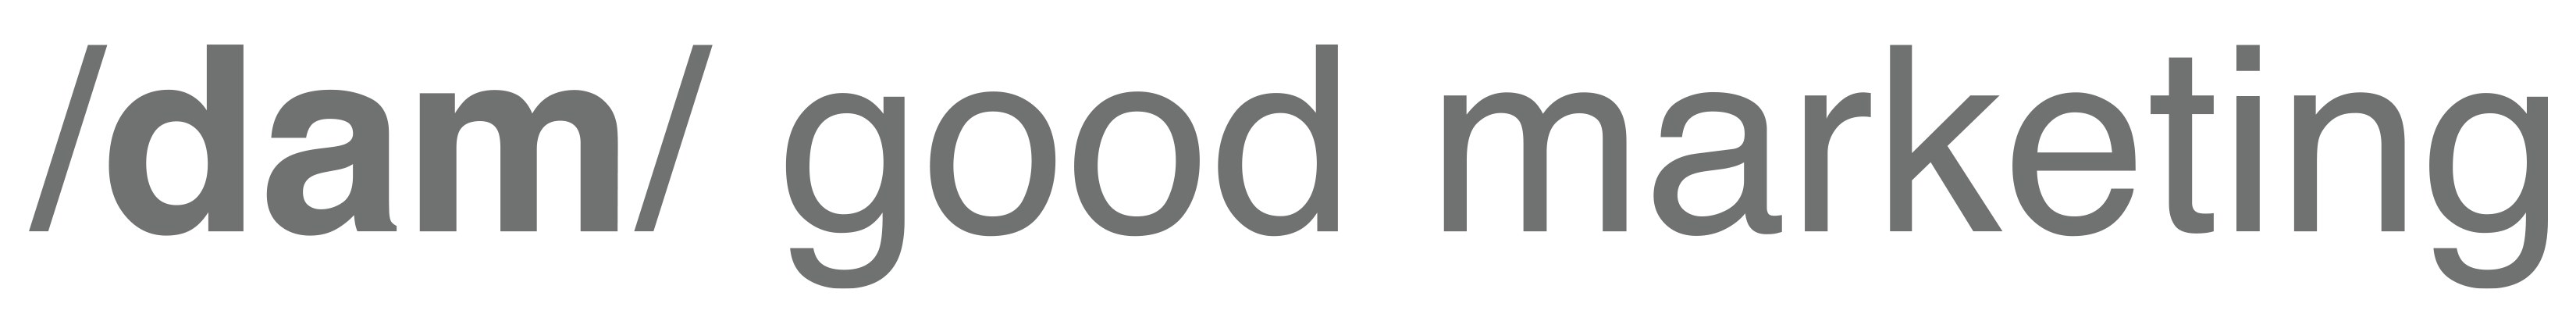 dam logo